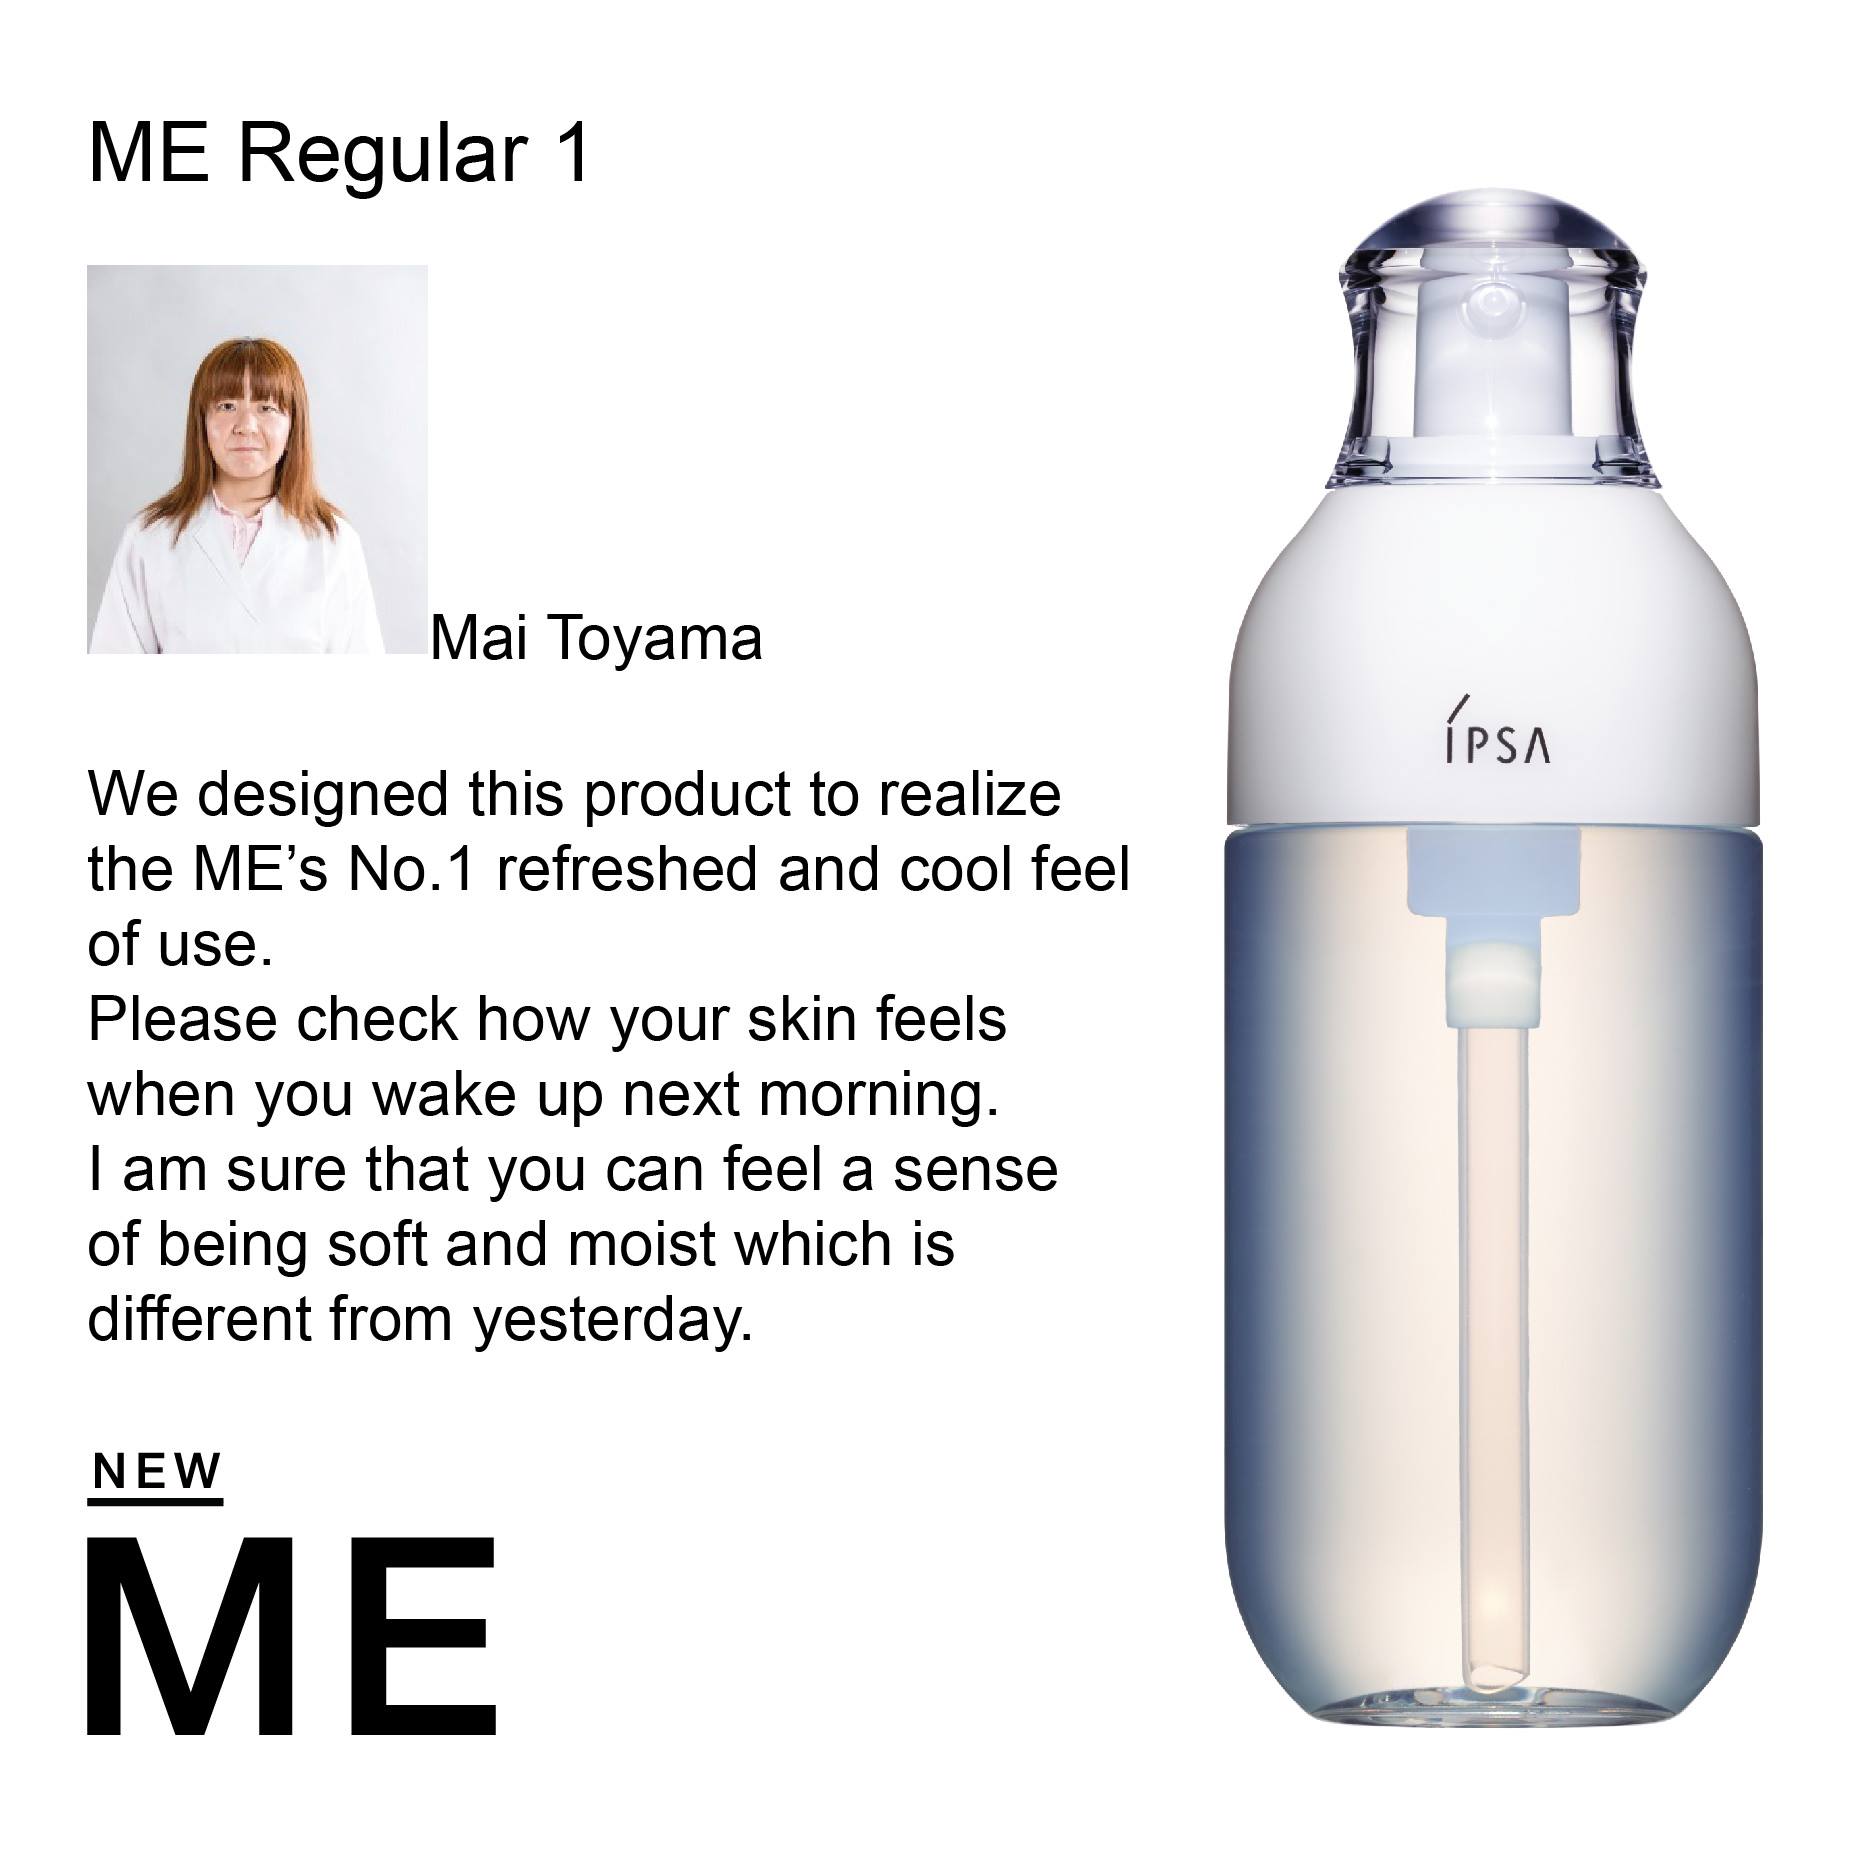 IPSA Metabolizer Me 1 คิดค้นโดย คุณ Mai Toyama  สูตรนี้มอบความรู้สึก สดชื่น และเย็นสบาย เหมาะสำหรับผิวมัน ให้ผิวอ่อนนุ่ม ชุ่มชื่น